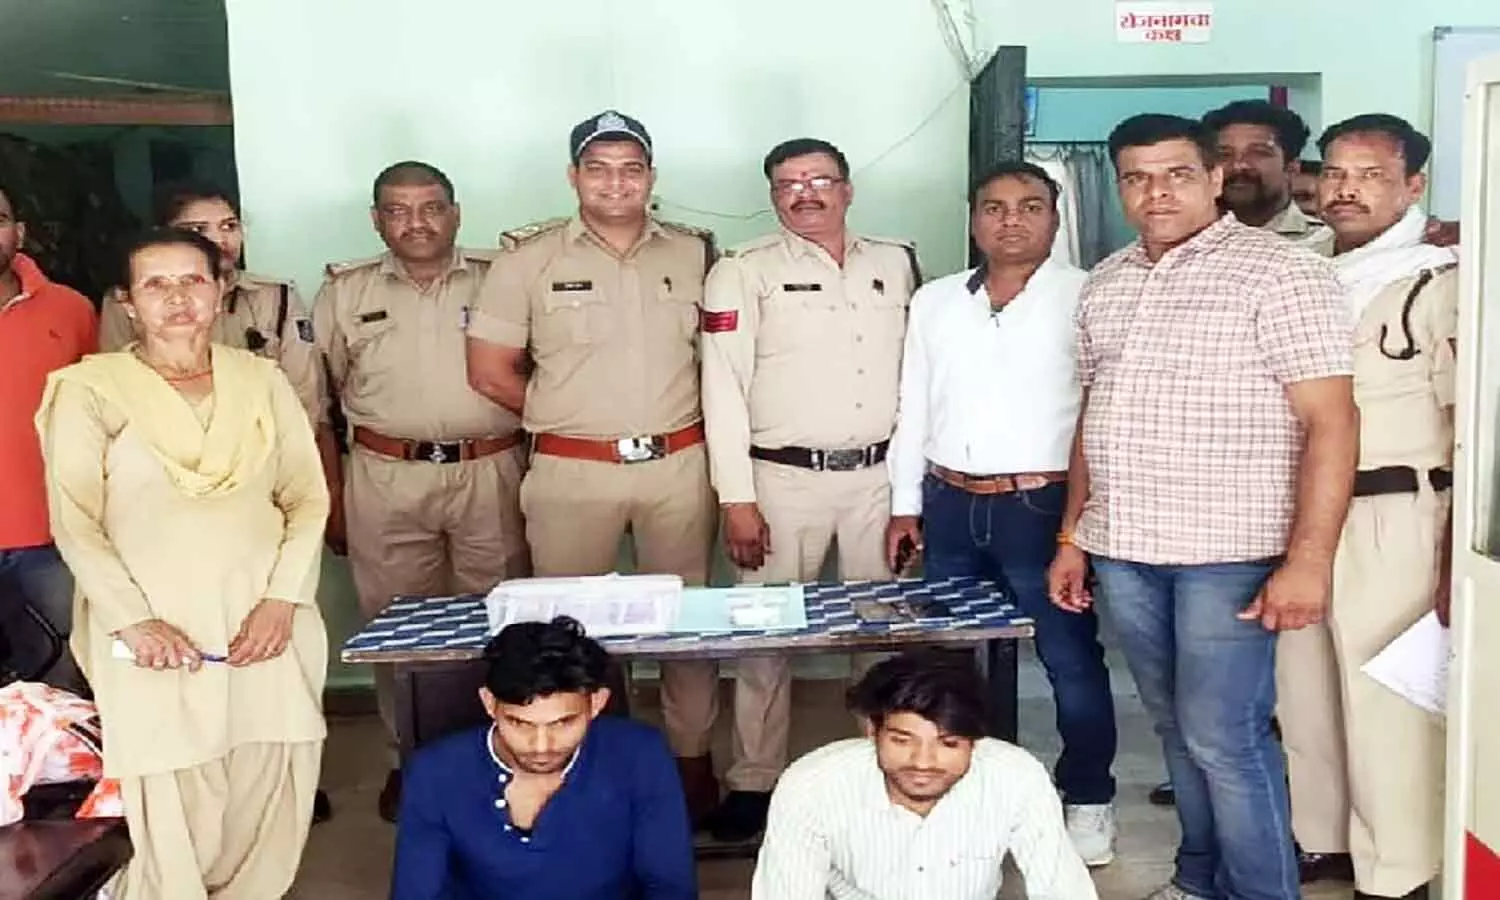 एमपी के सागर में नकली नोट छापने वाले तीन आरोपी गिरफ्तार, 32 हजार रुपए बरामद